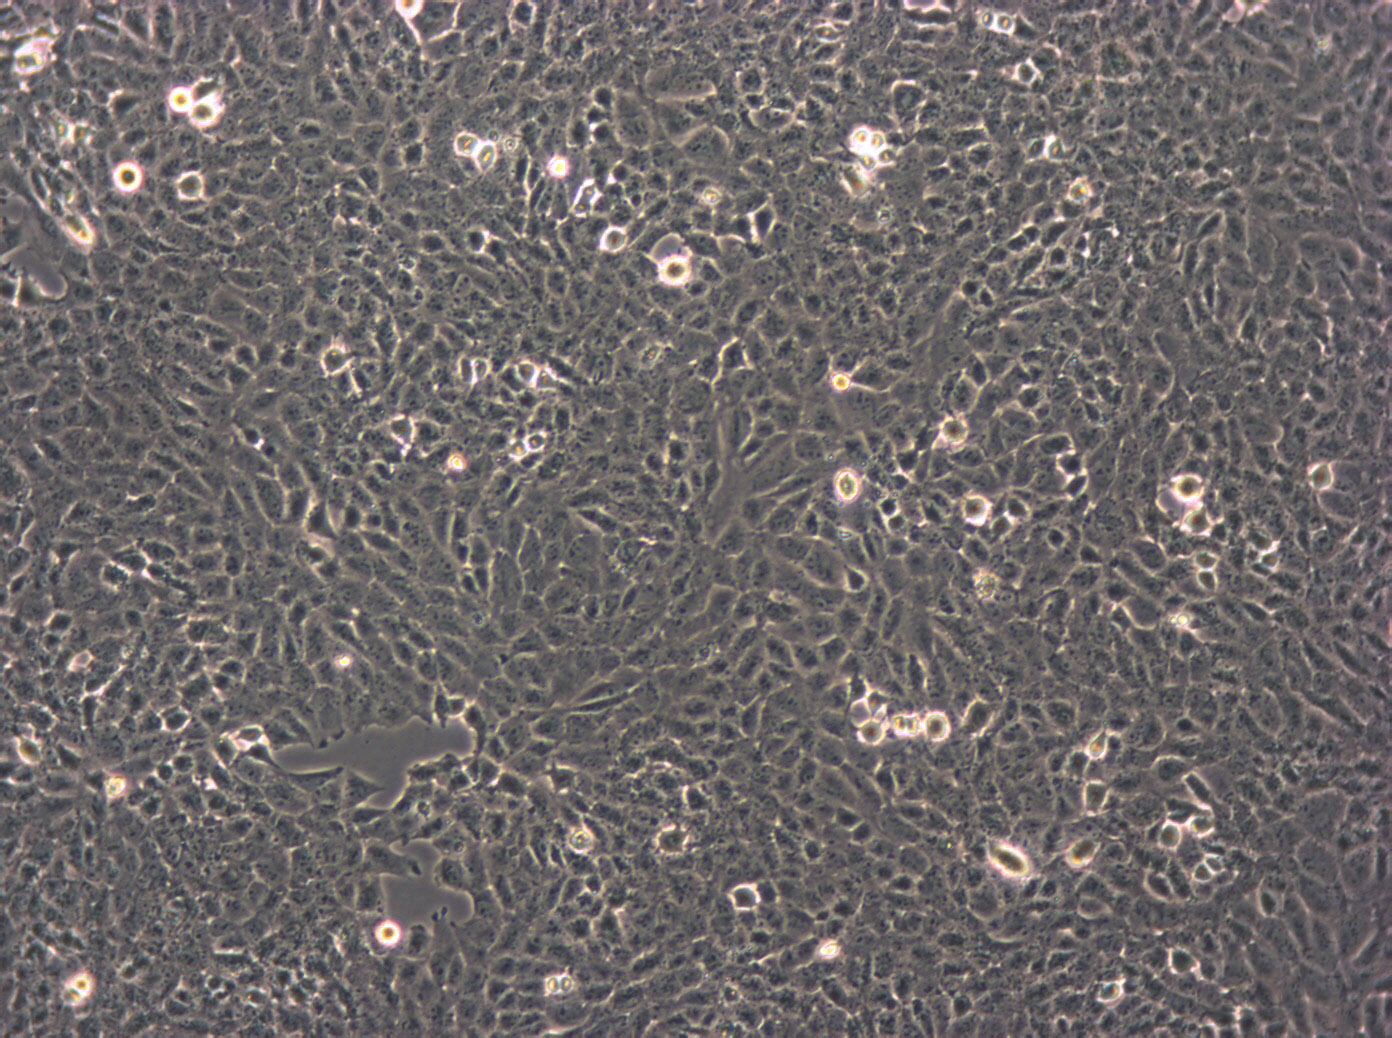 BHK-21 Cells|仓鼠肾成纤维可传代细胞系,BHK-21 Cells